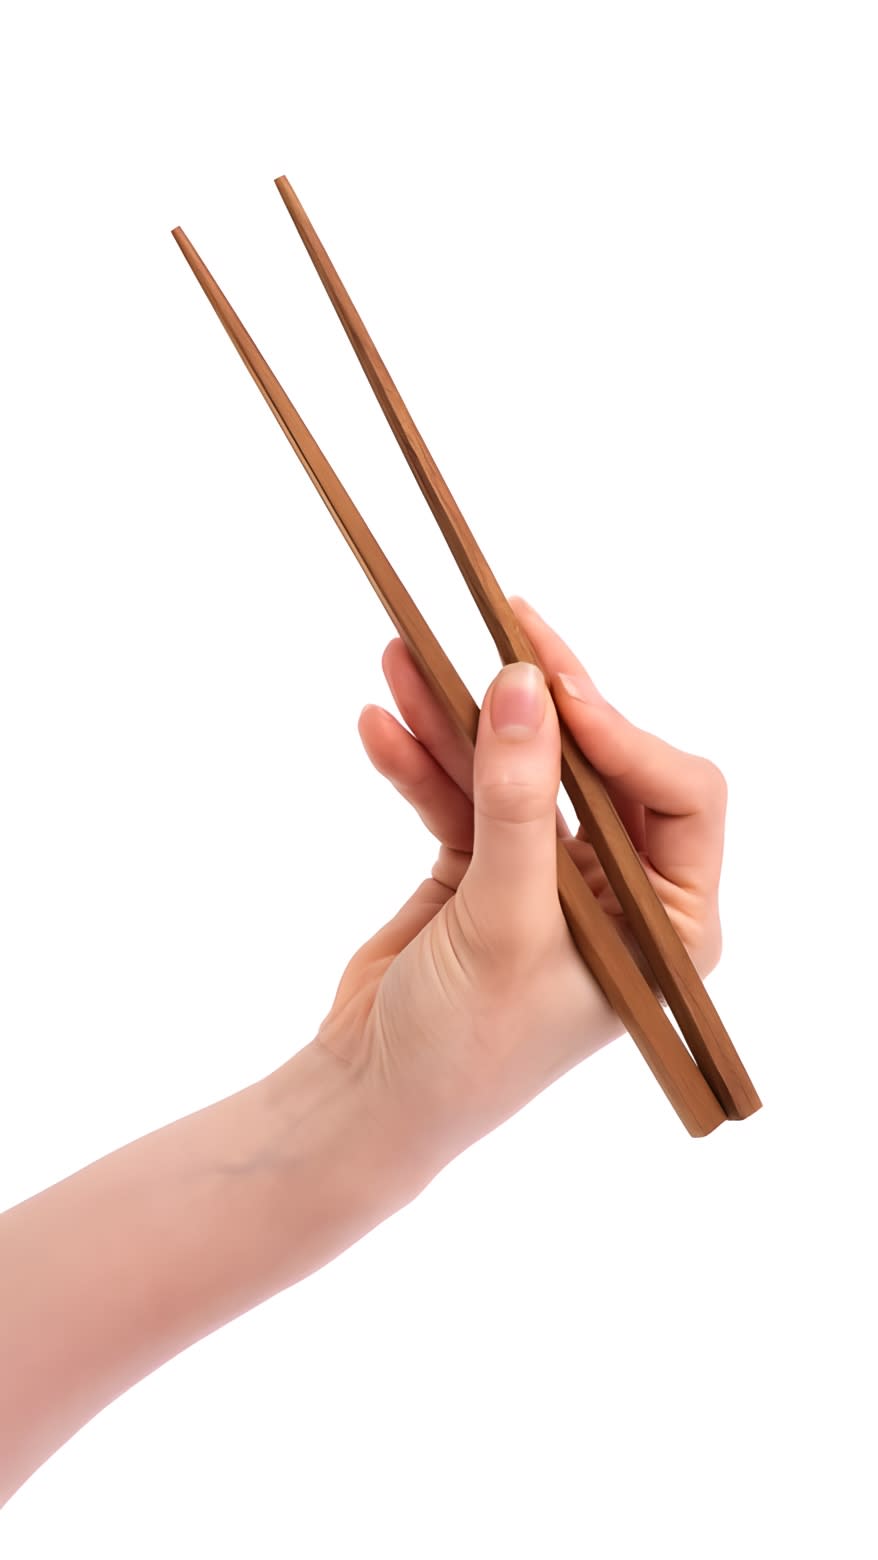 A person holding chopsticks